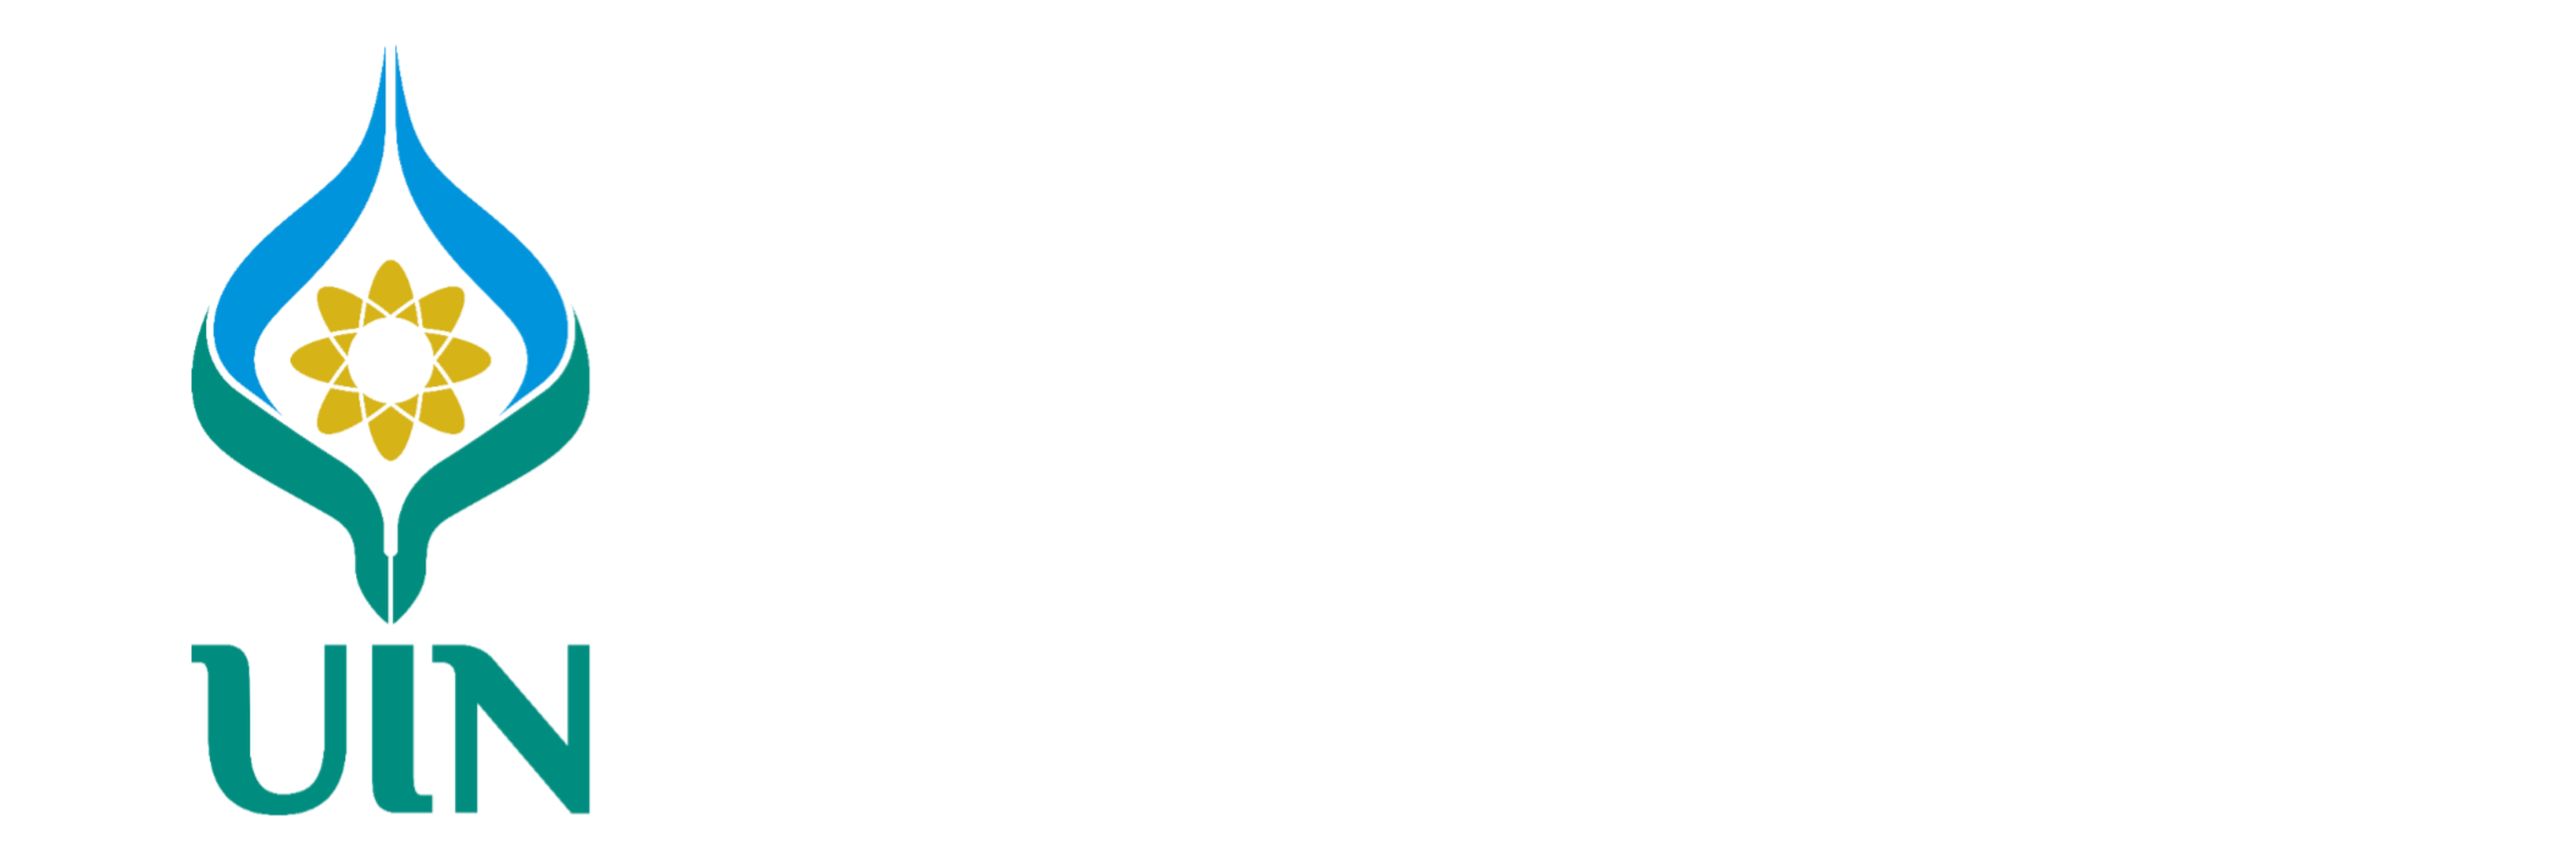 Official Website UIN Antasari